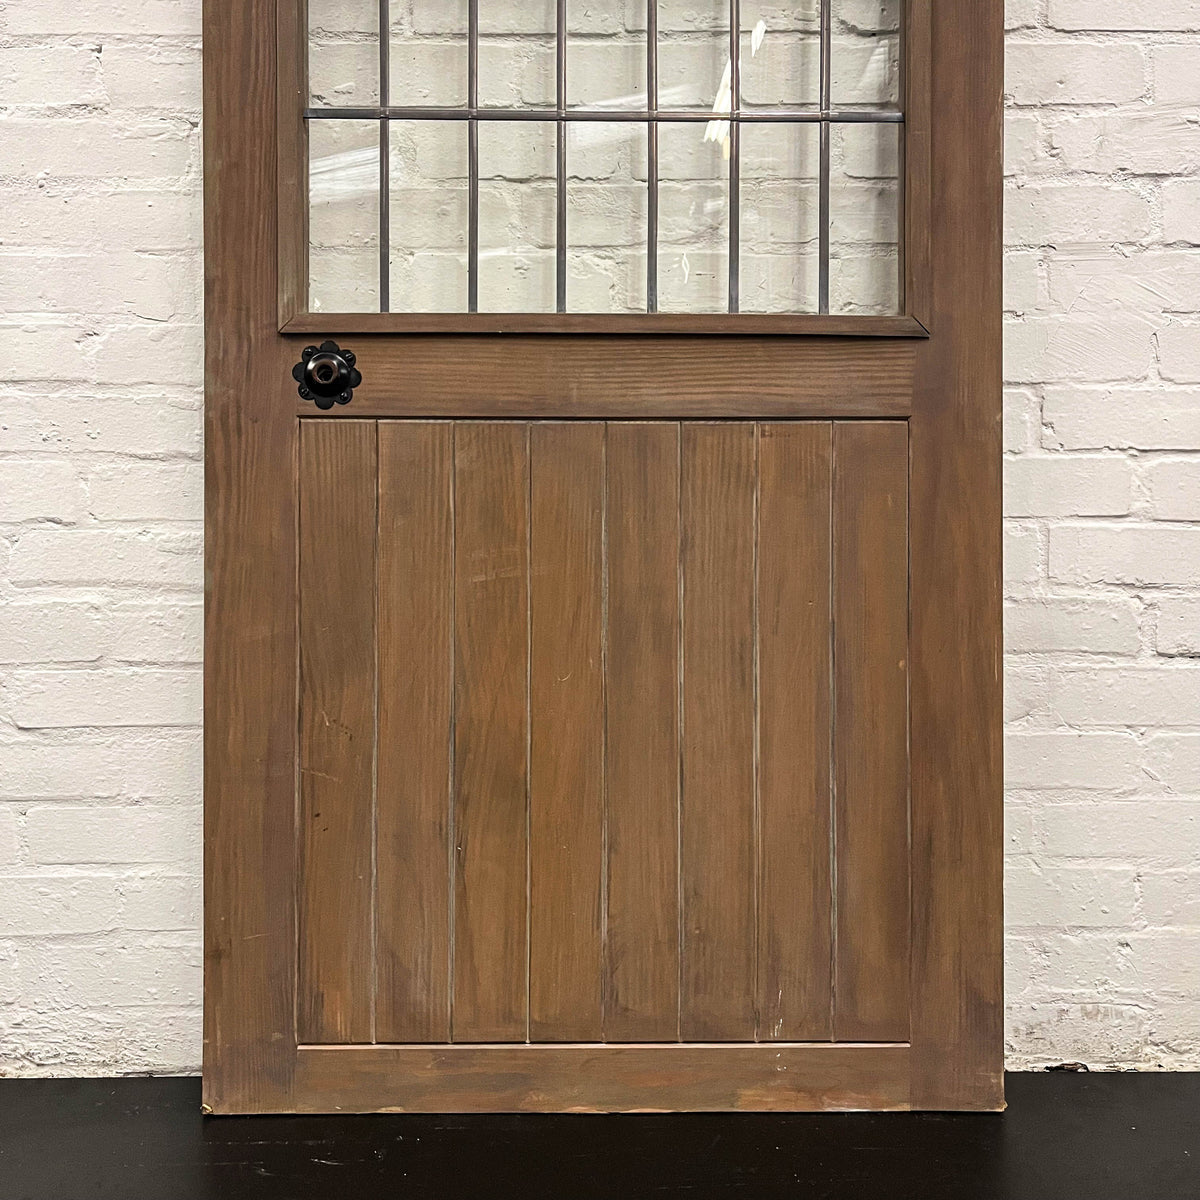 Antique Victorian Glazed Latch Door - 194cm x 81cm | The Architectural Forum